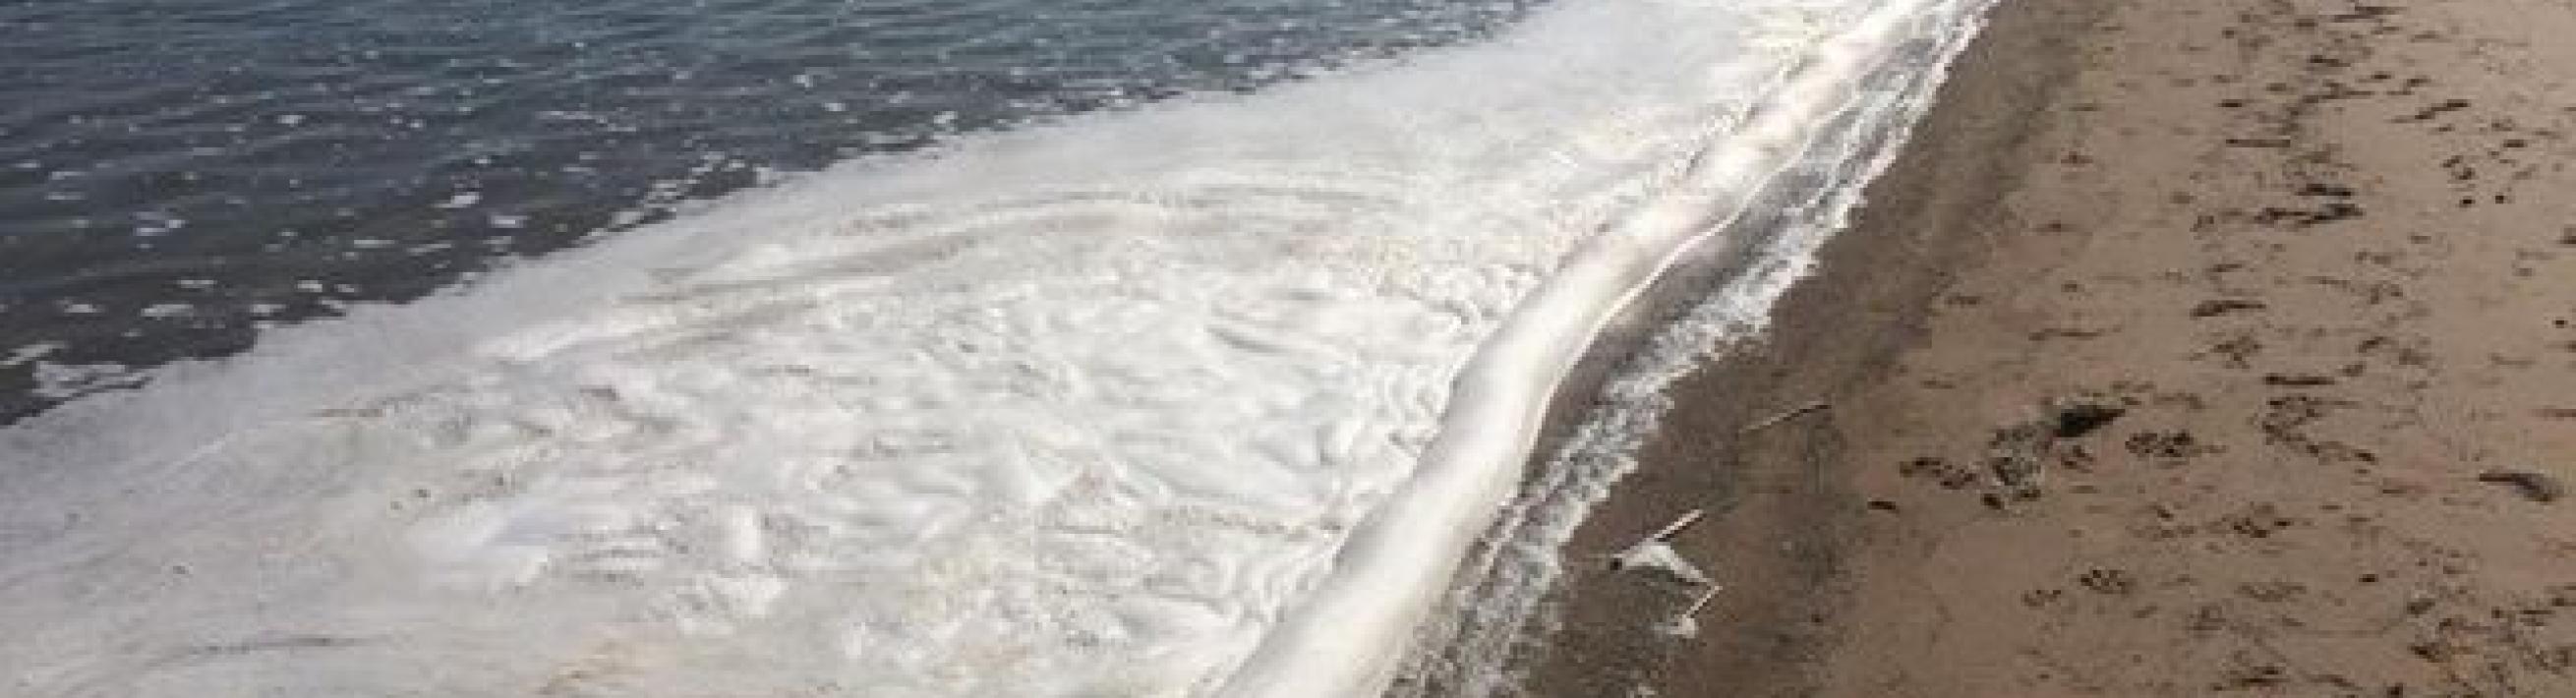 PFAS foam washes up on Lake Huron